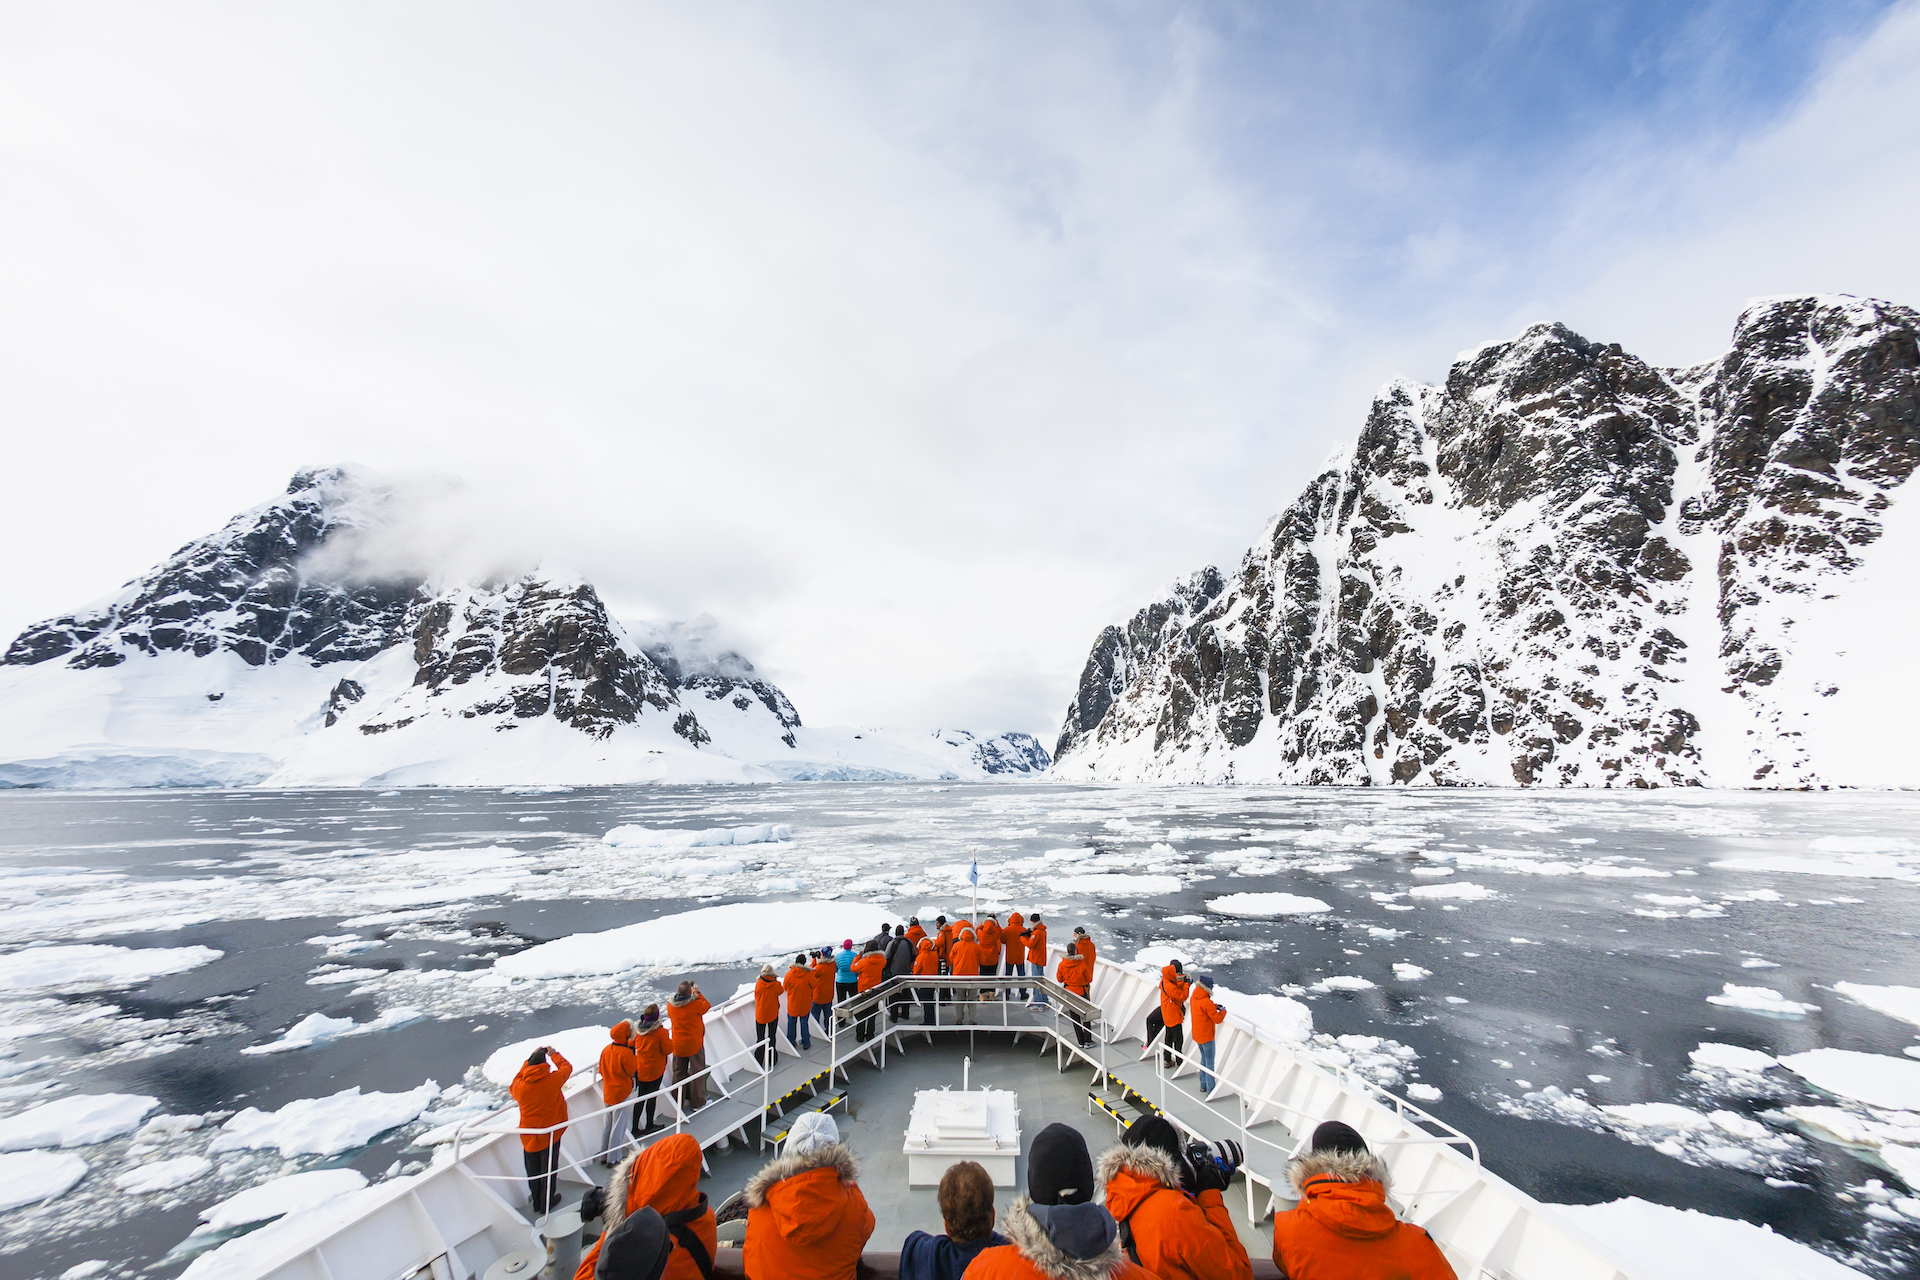 Will Antarctica ever be habitable?